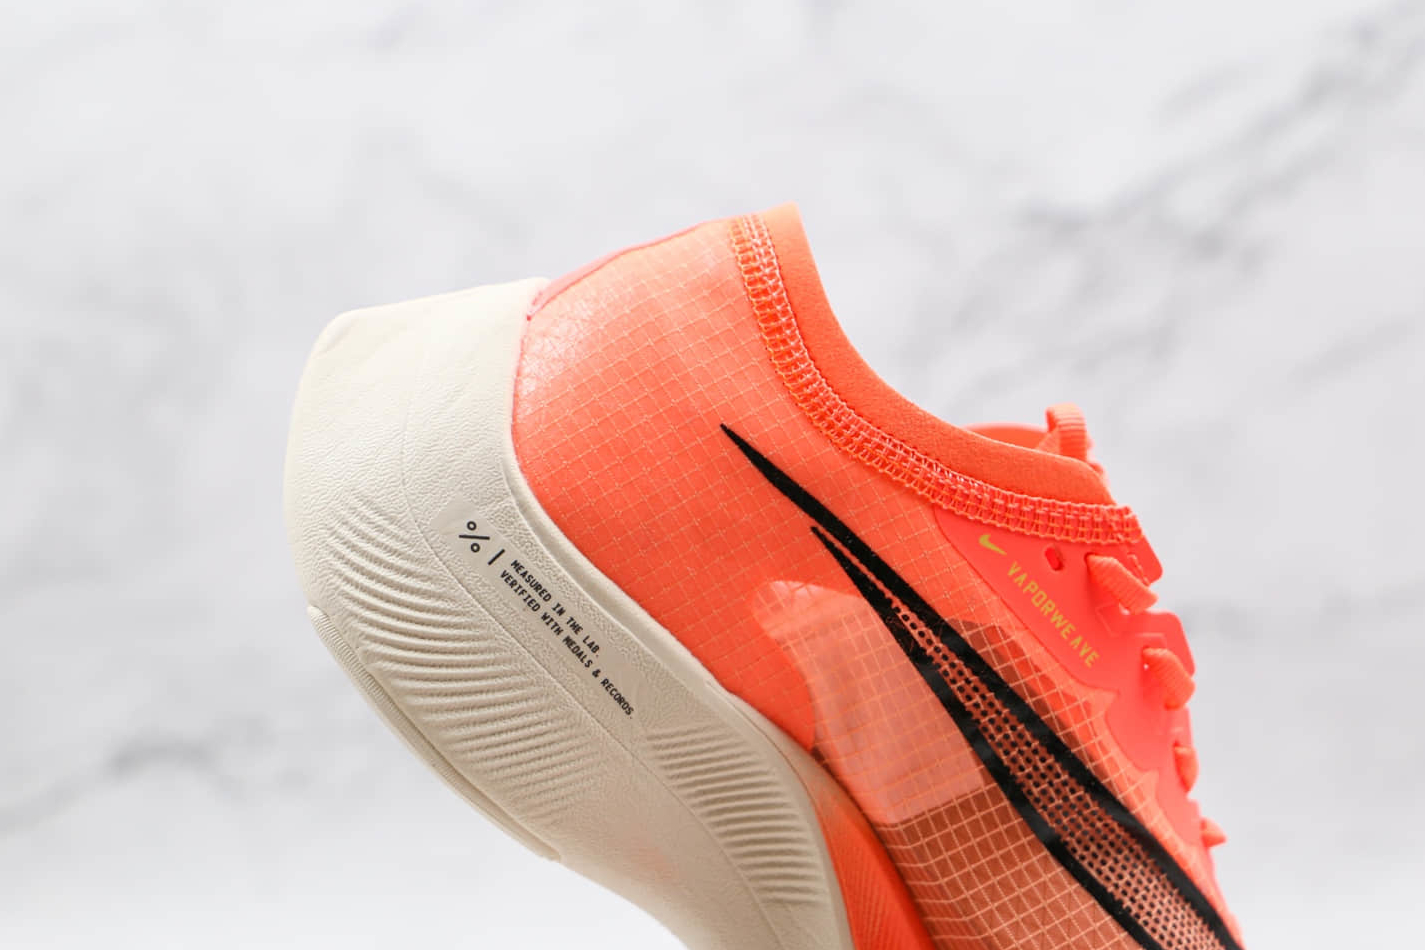 Nike ZoomX Vaporfly NEXT% 'Bright Mango' AO4568-800 - Fastest Running Shoes for Elite Athletes!